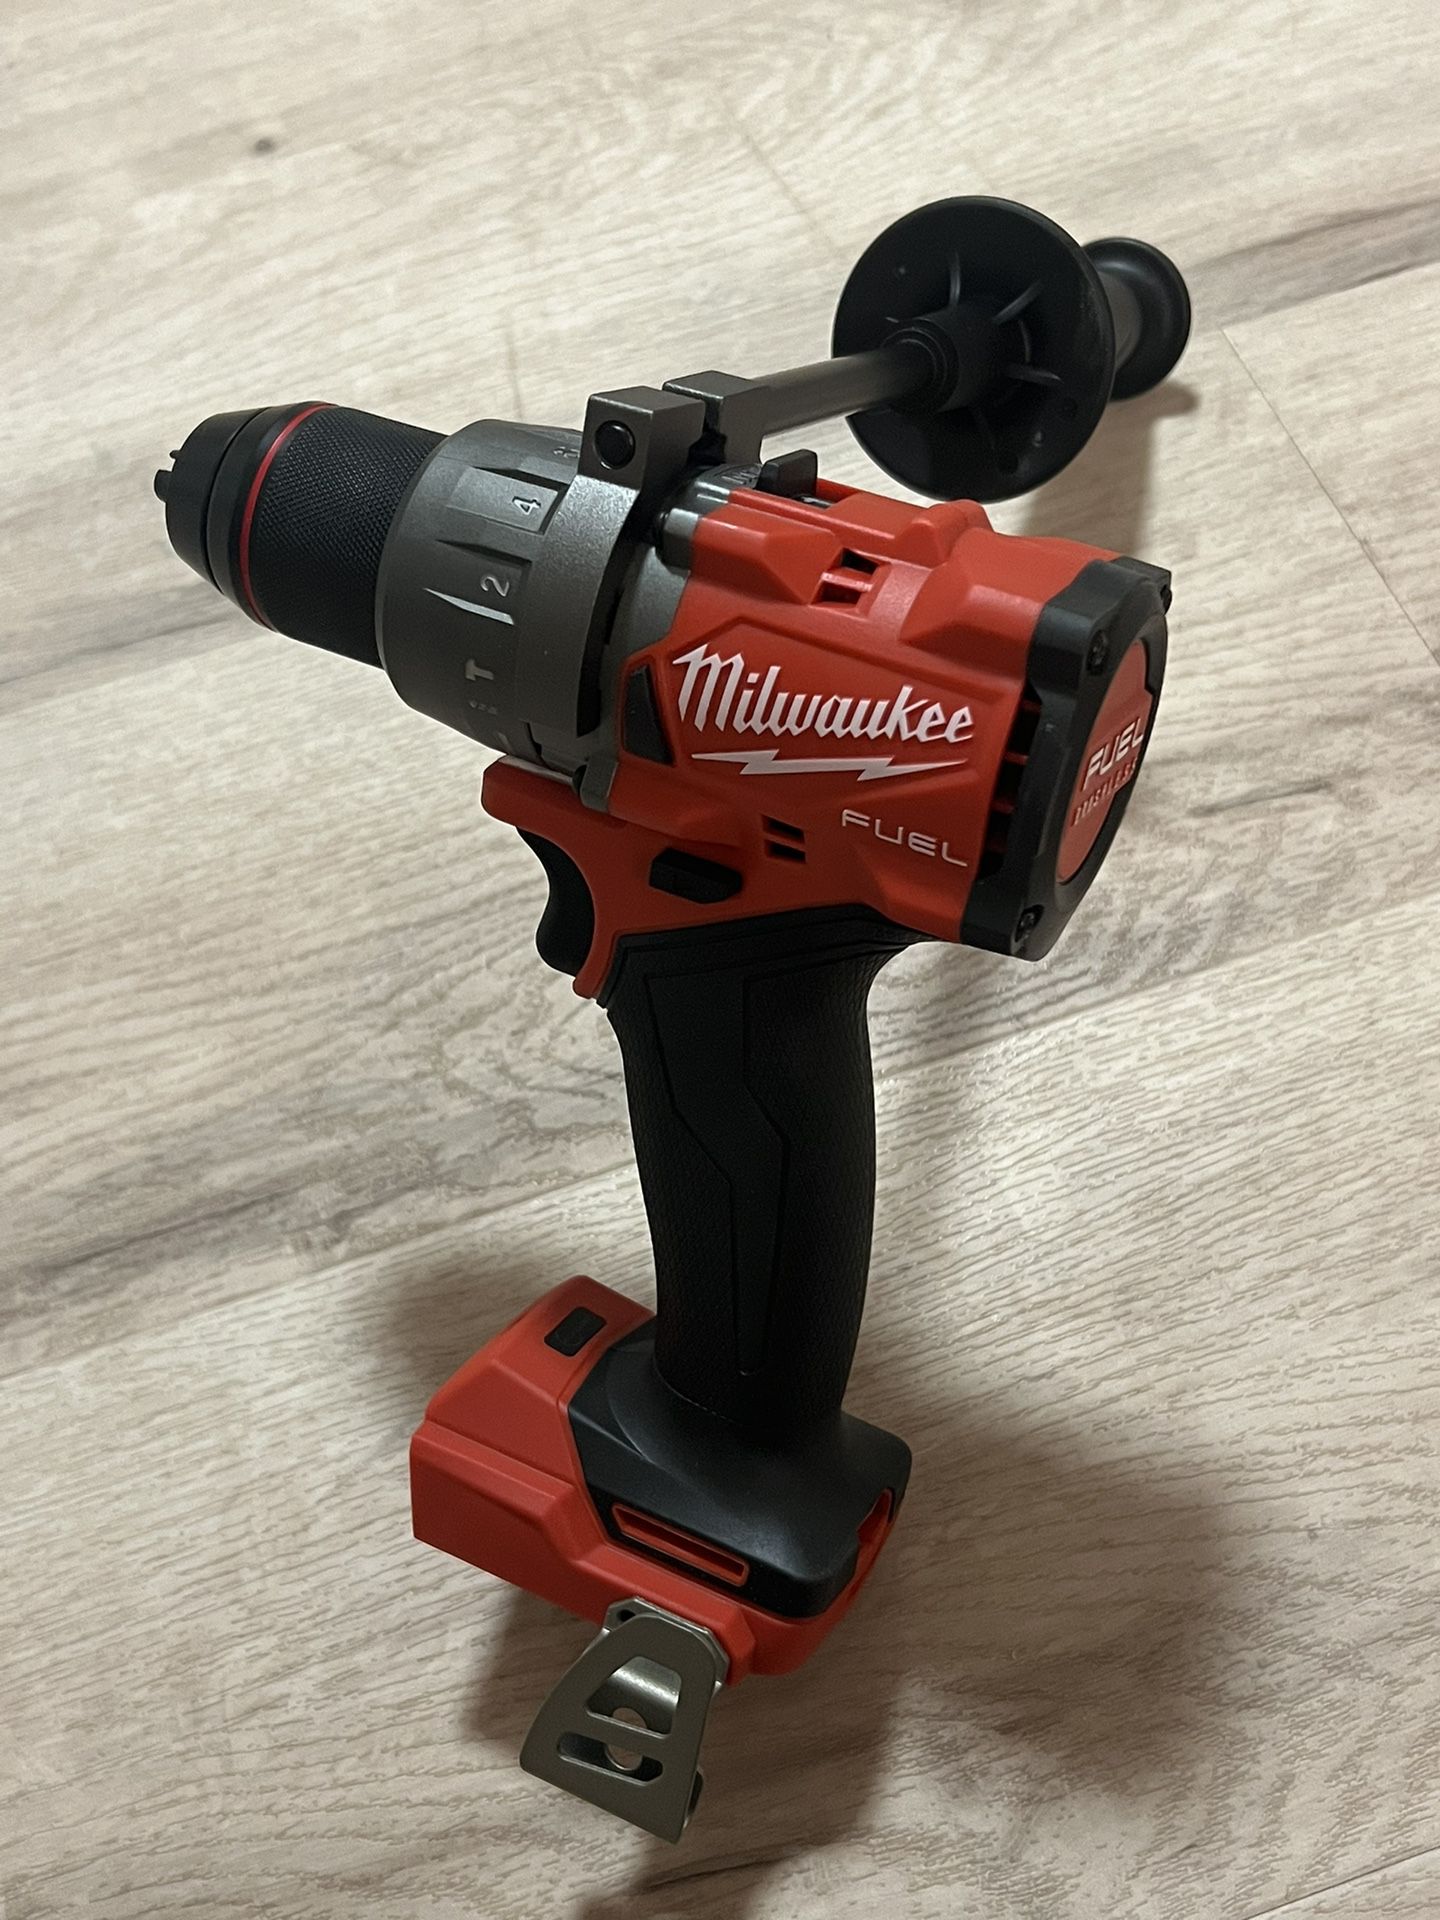 Brand New Milwaukee M18 Fuel Hammer Drill